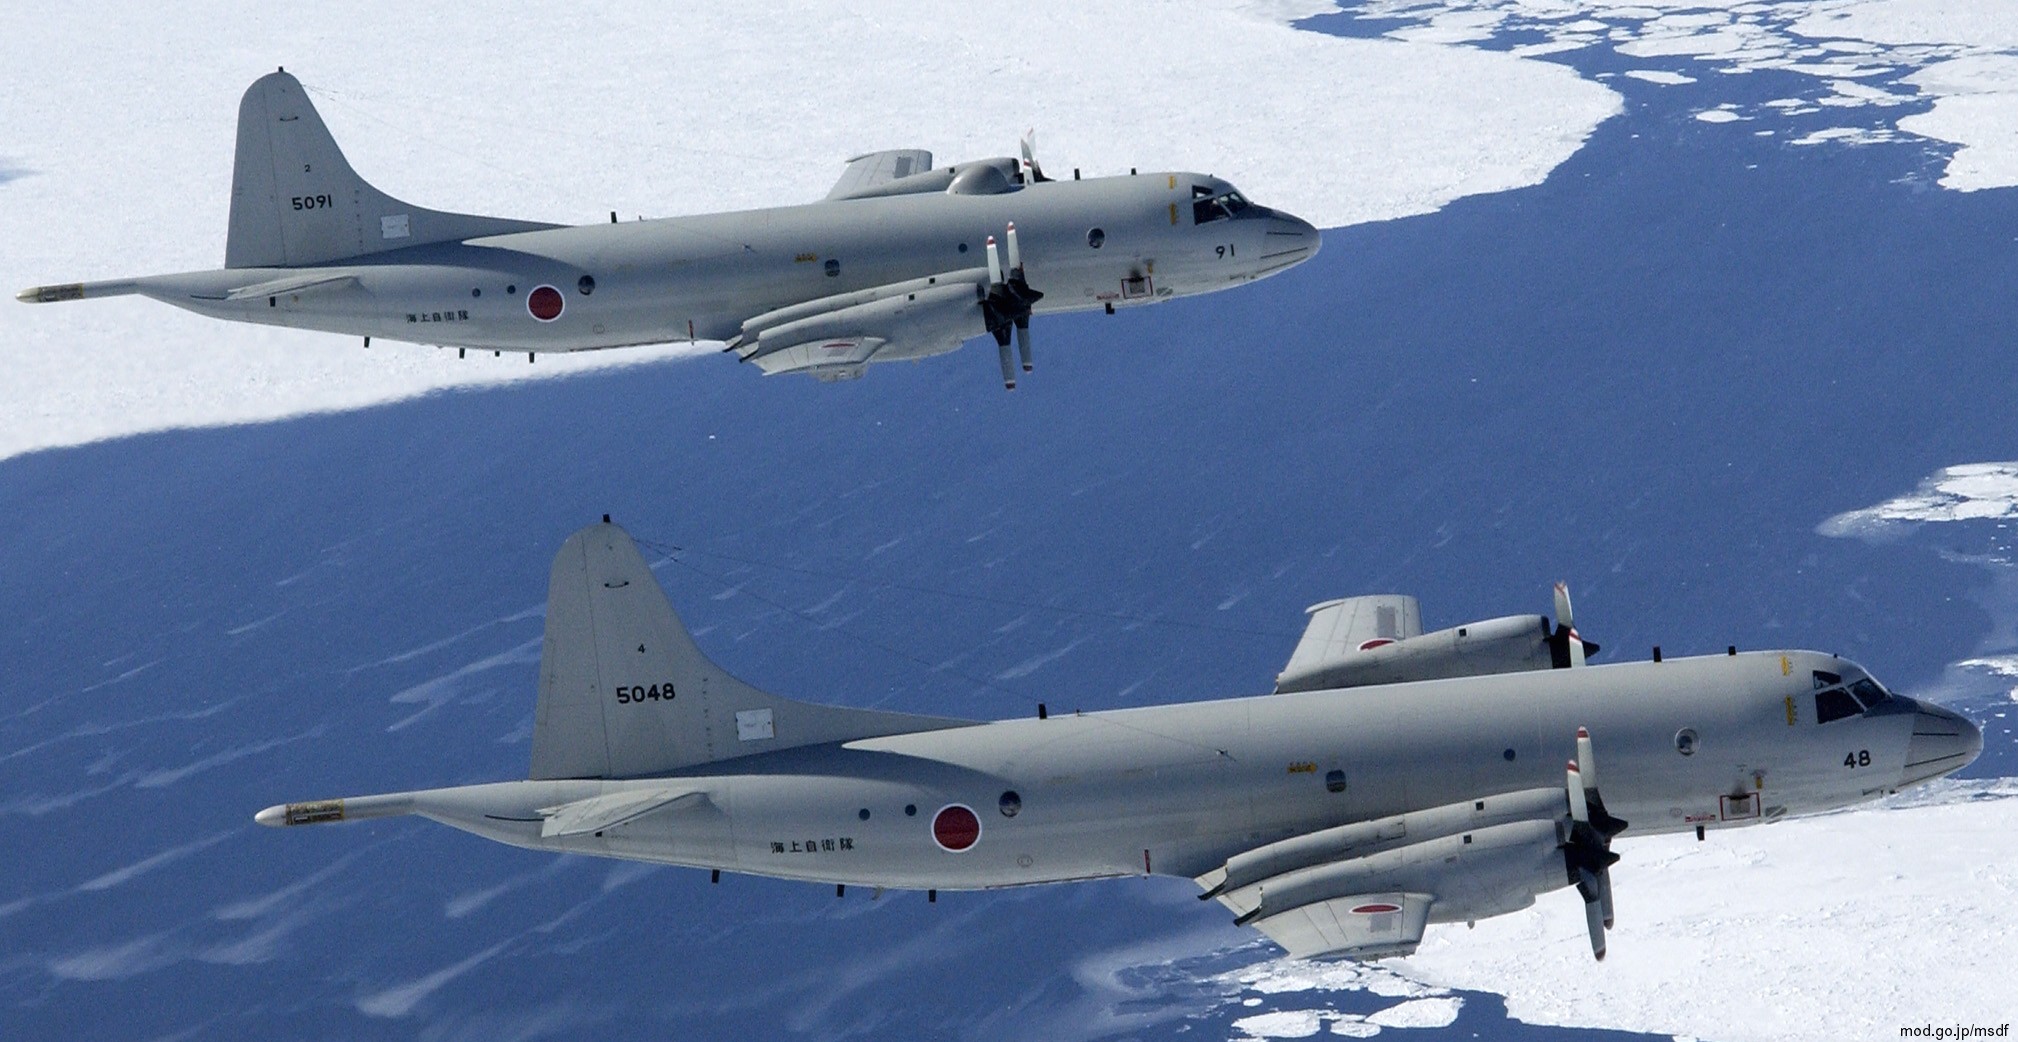 kawasaki p-3c orion patrol aircraft mpa japan maritime self defense force jmsdf 5048 02